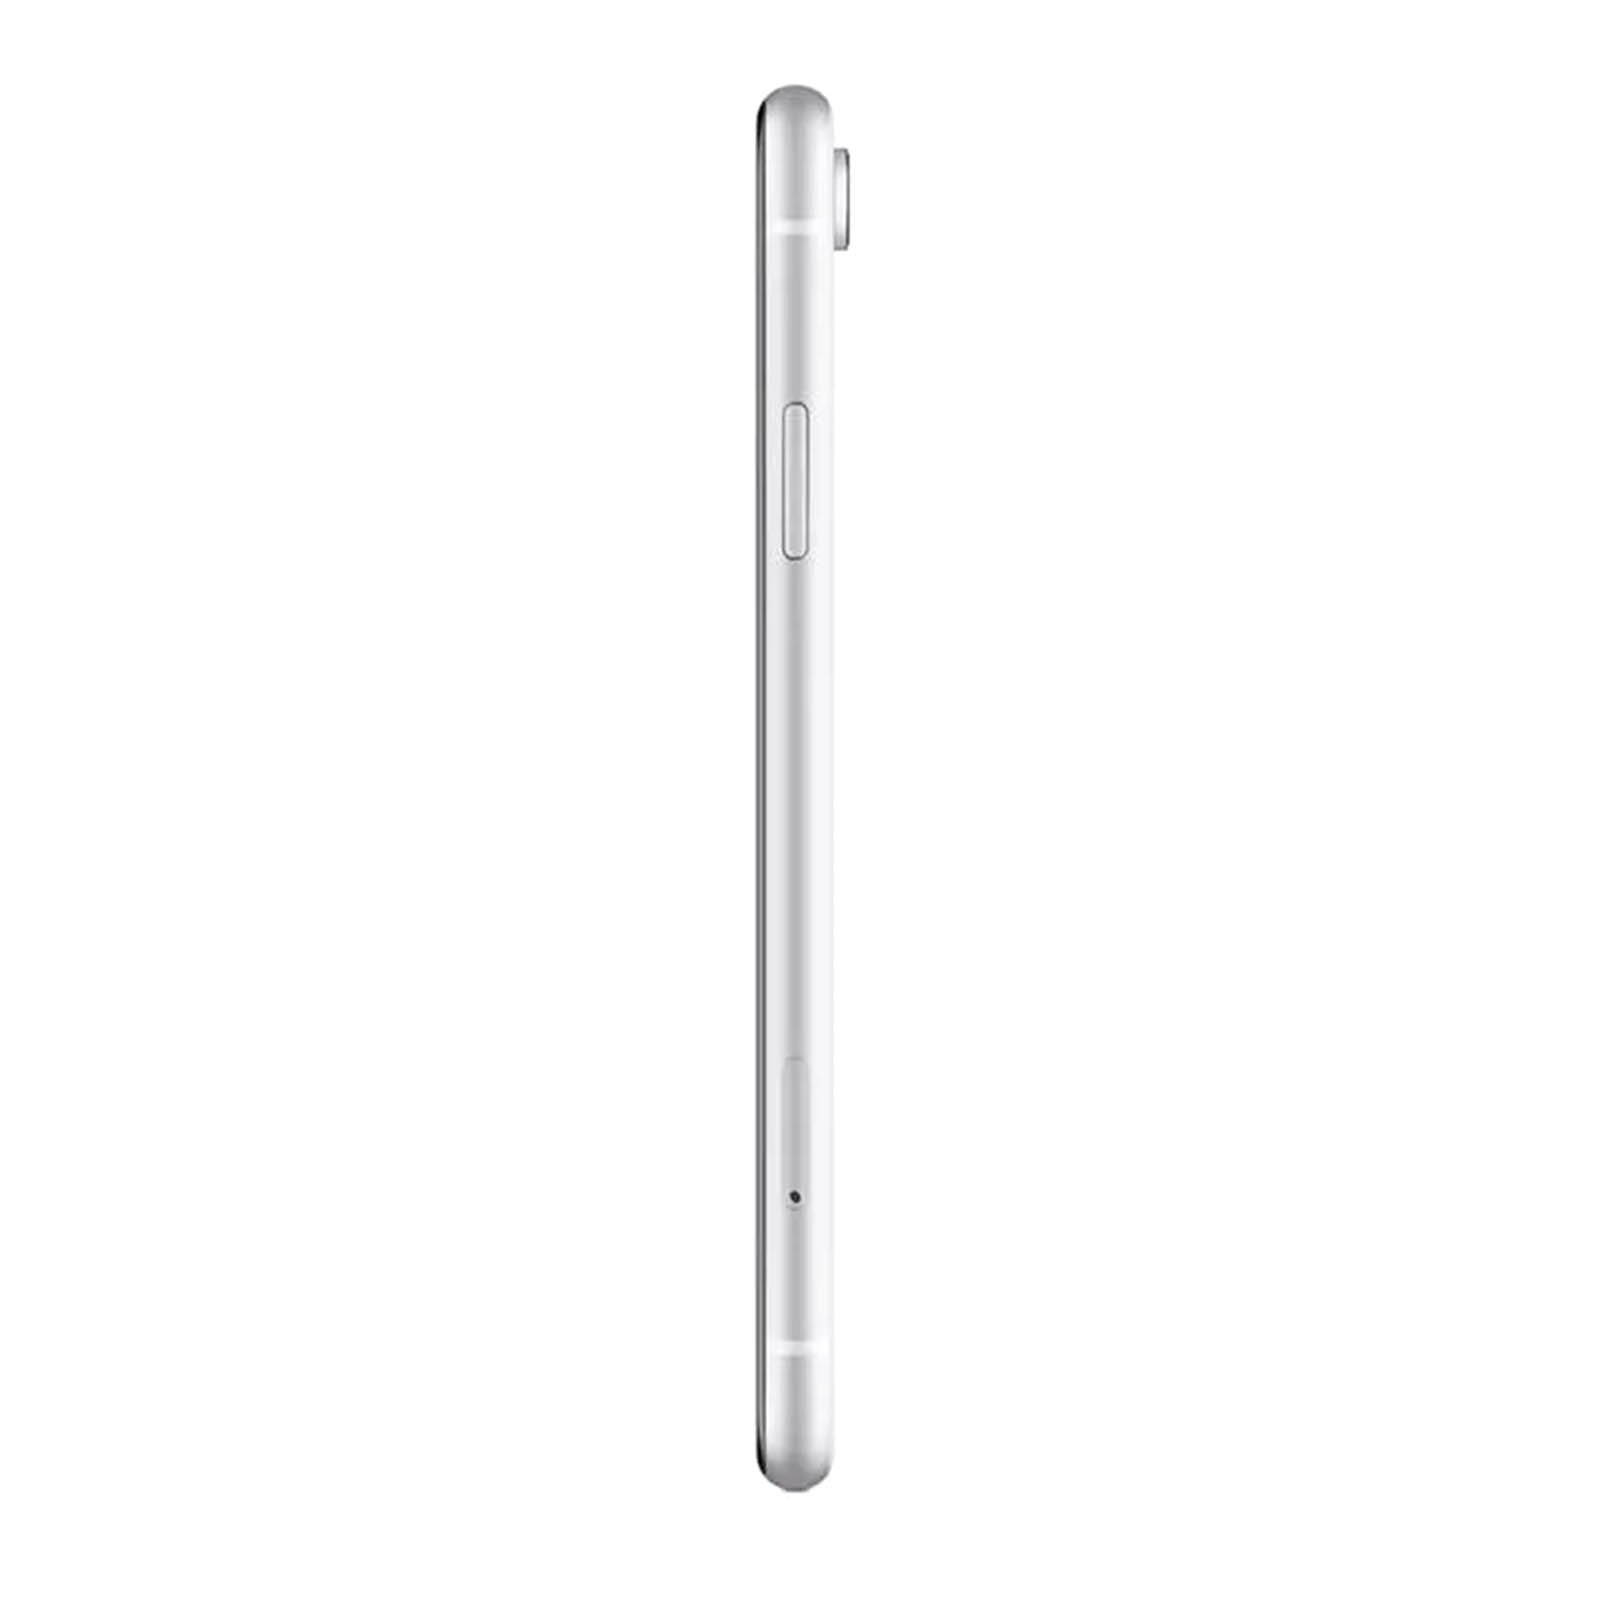 Apple iPhone XR 64GB White Very Good - Unlocked